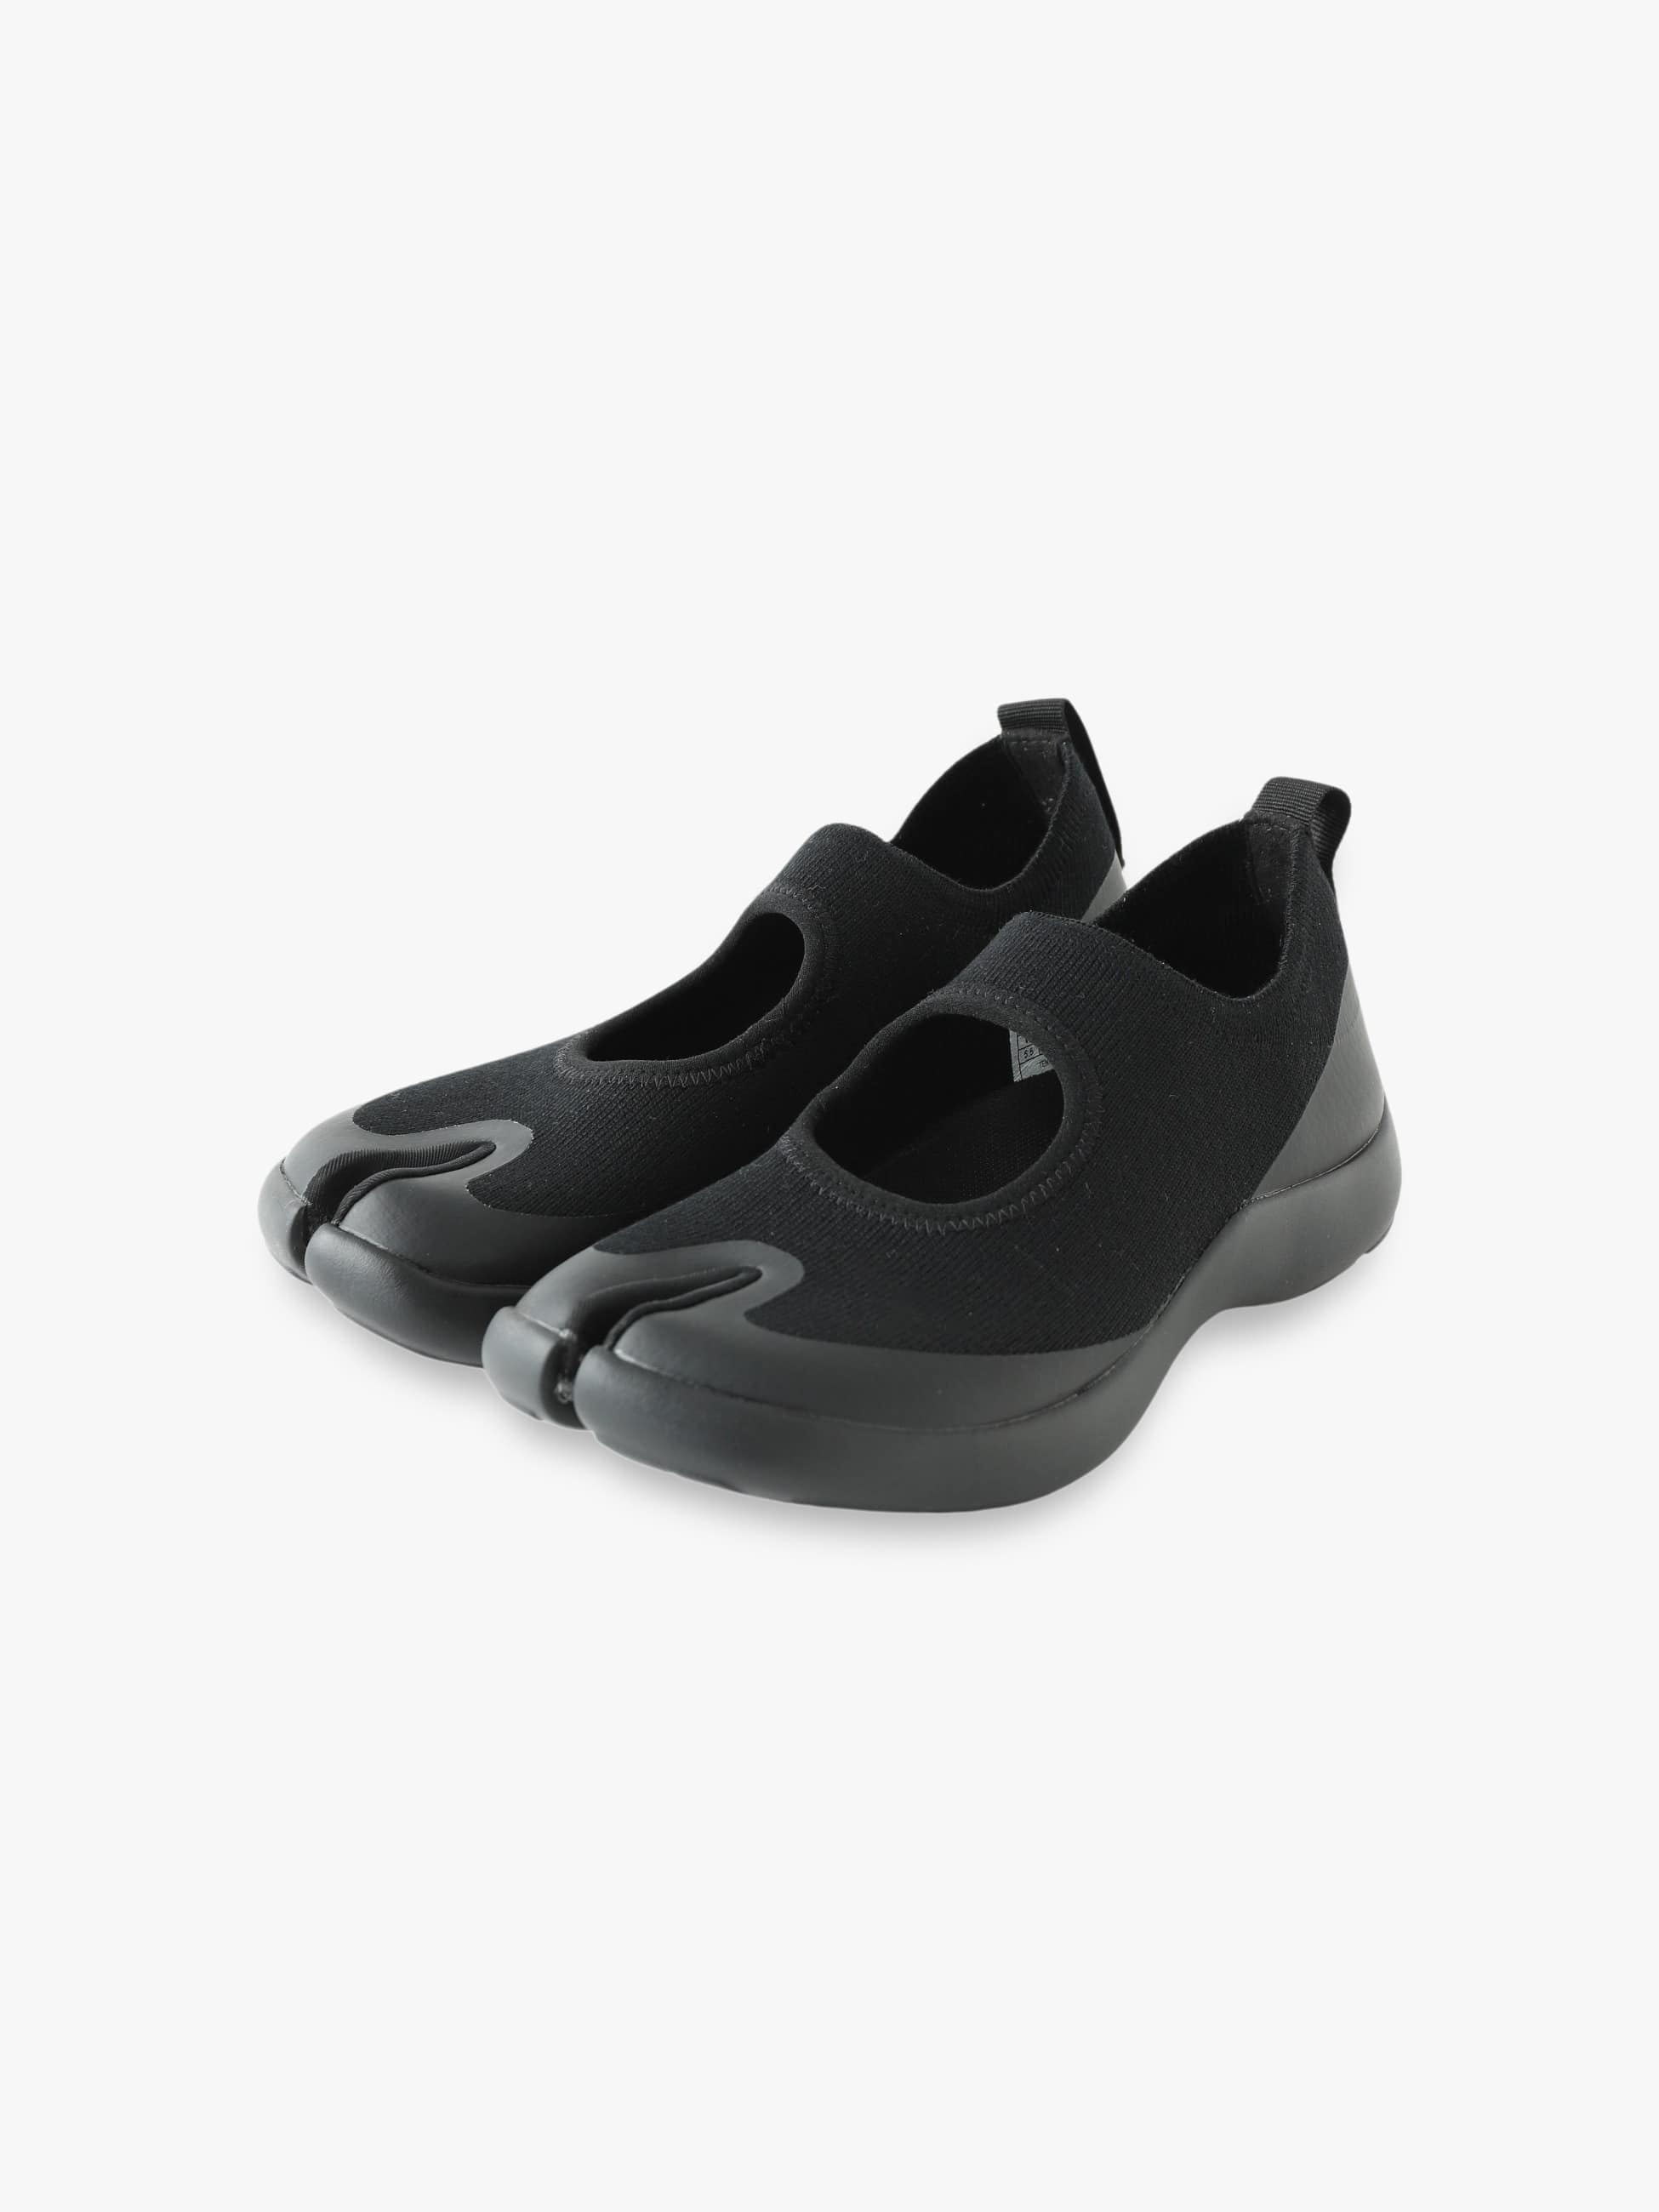 Tabi Sandals｜TABI Footwear(タビフットウェア)｜Ron Herman